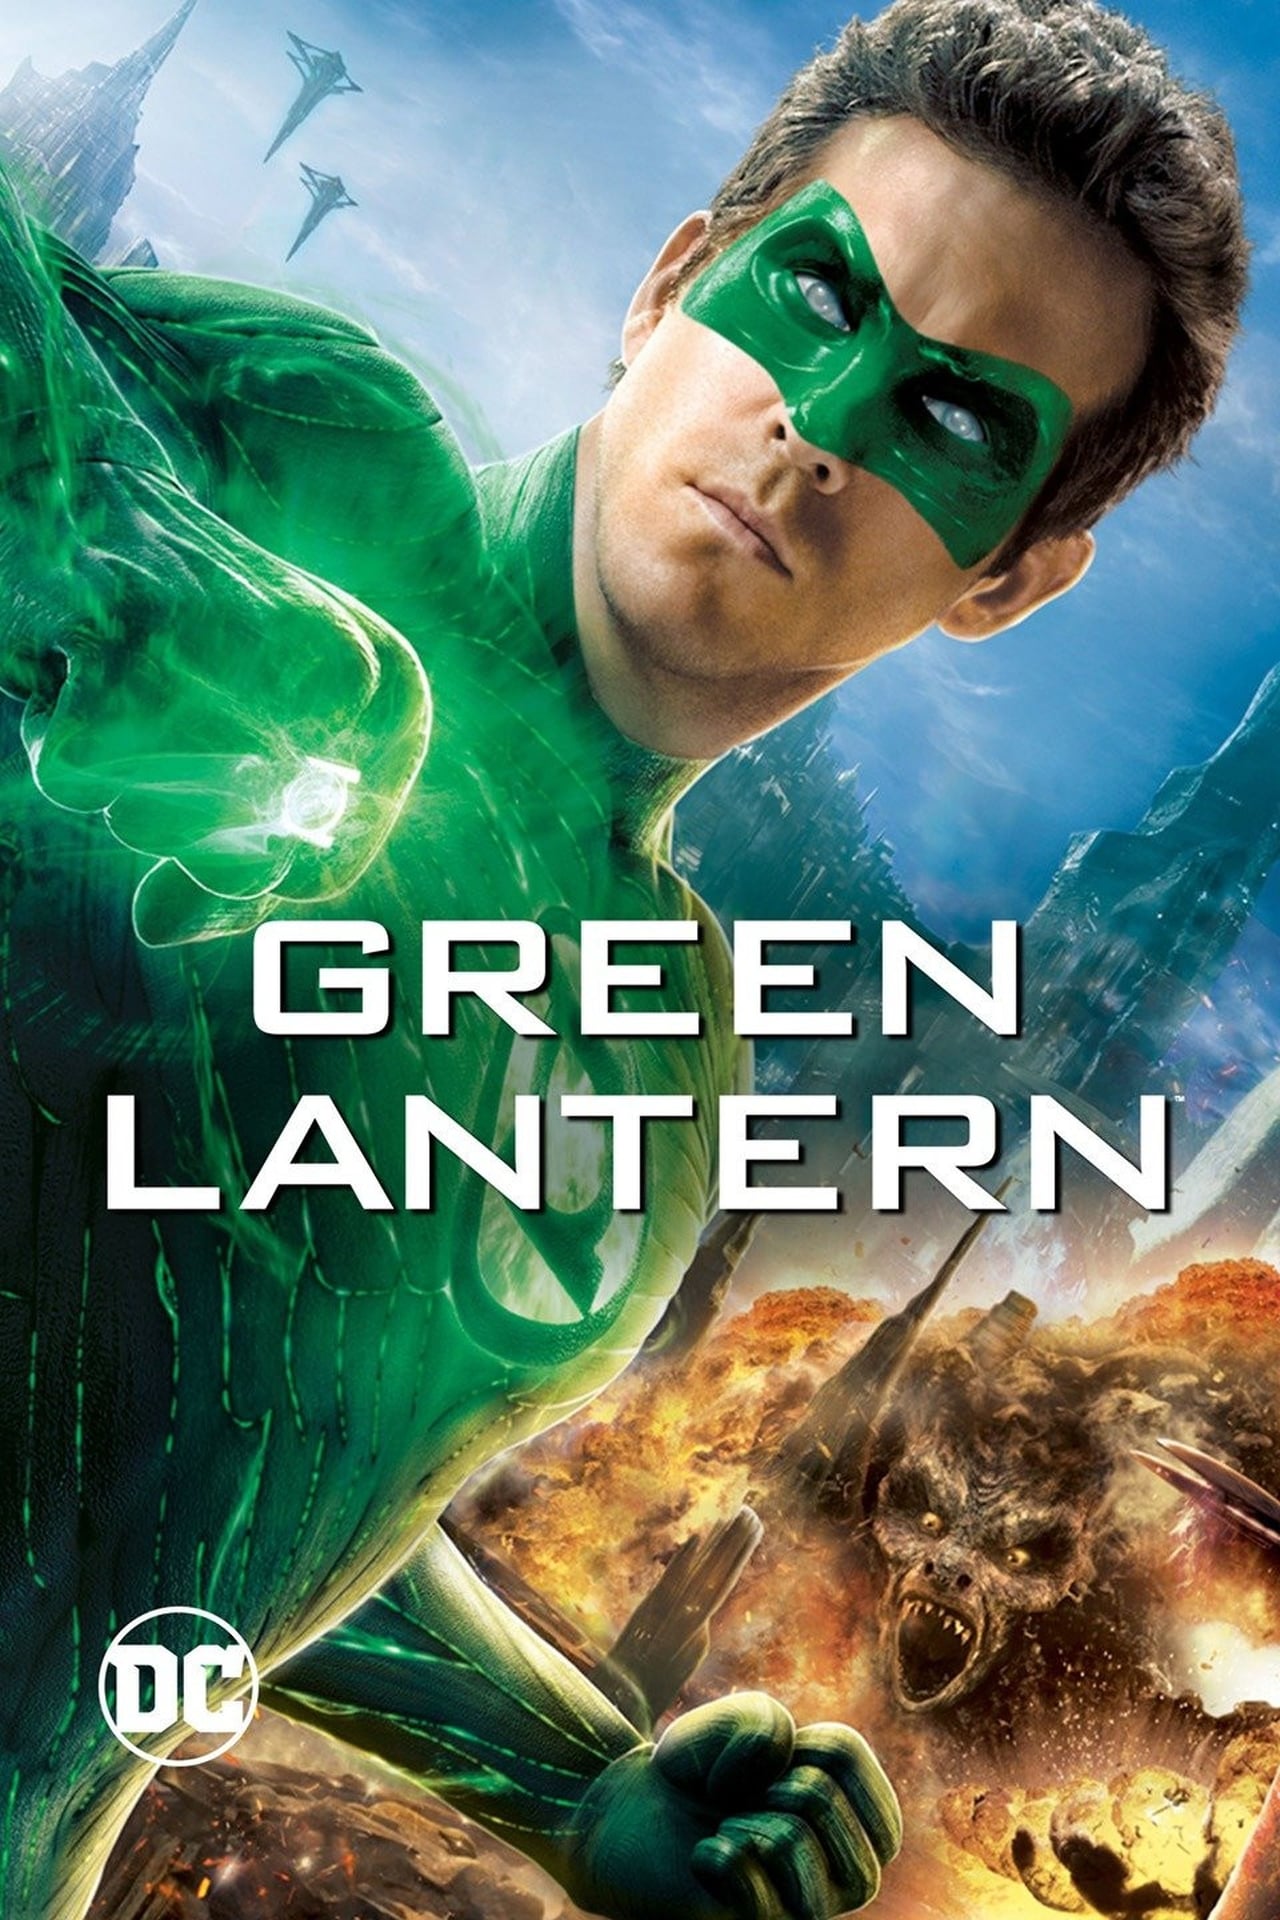 green lantern 2011 extended cut